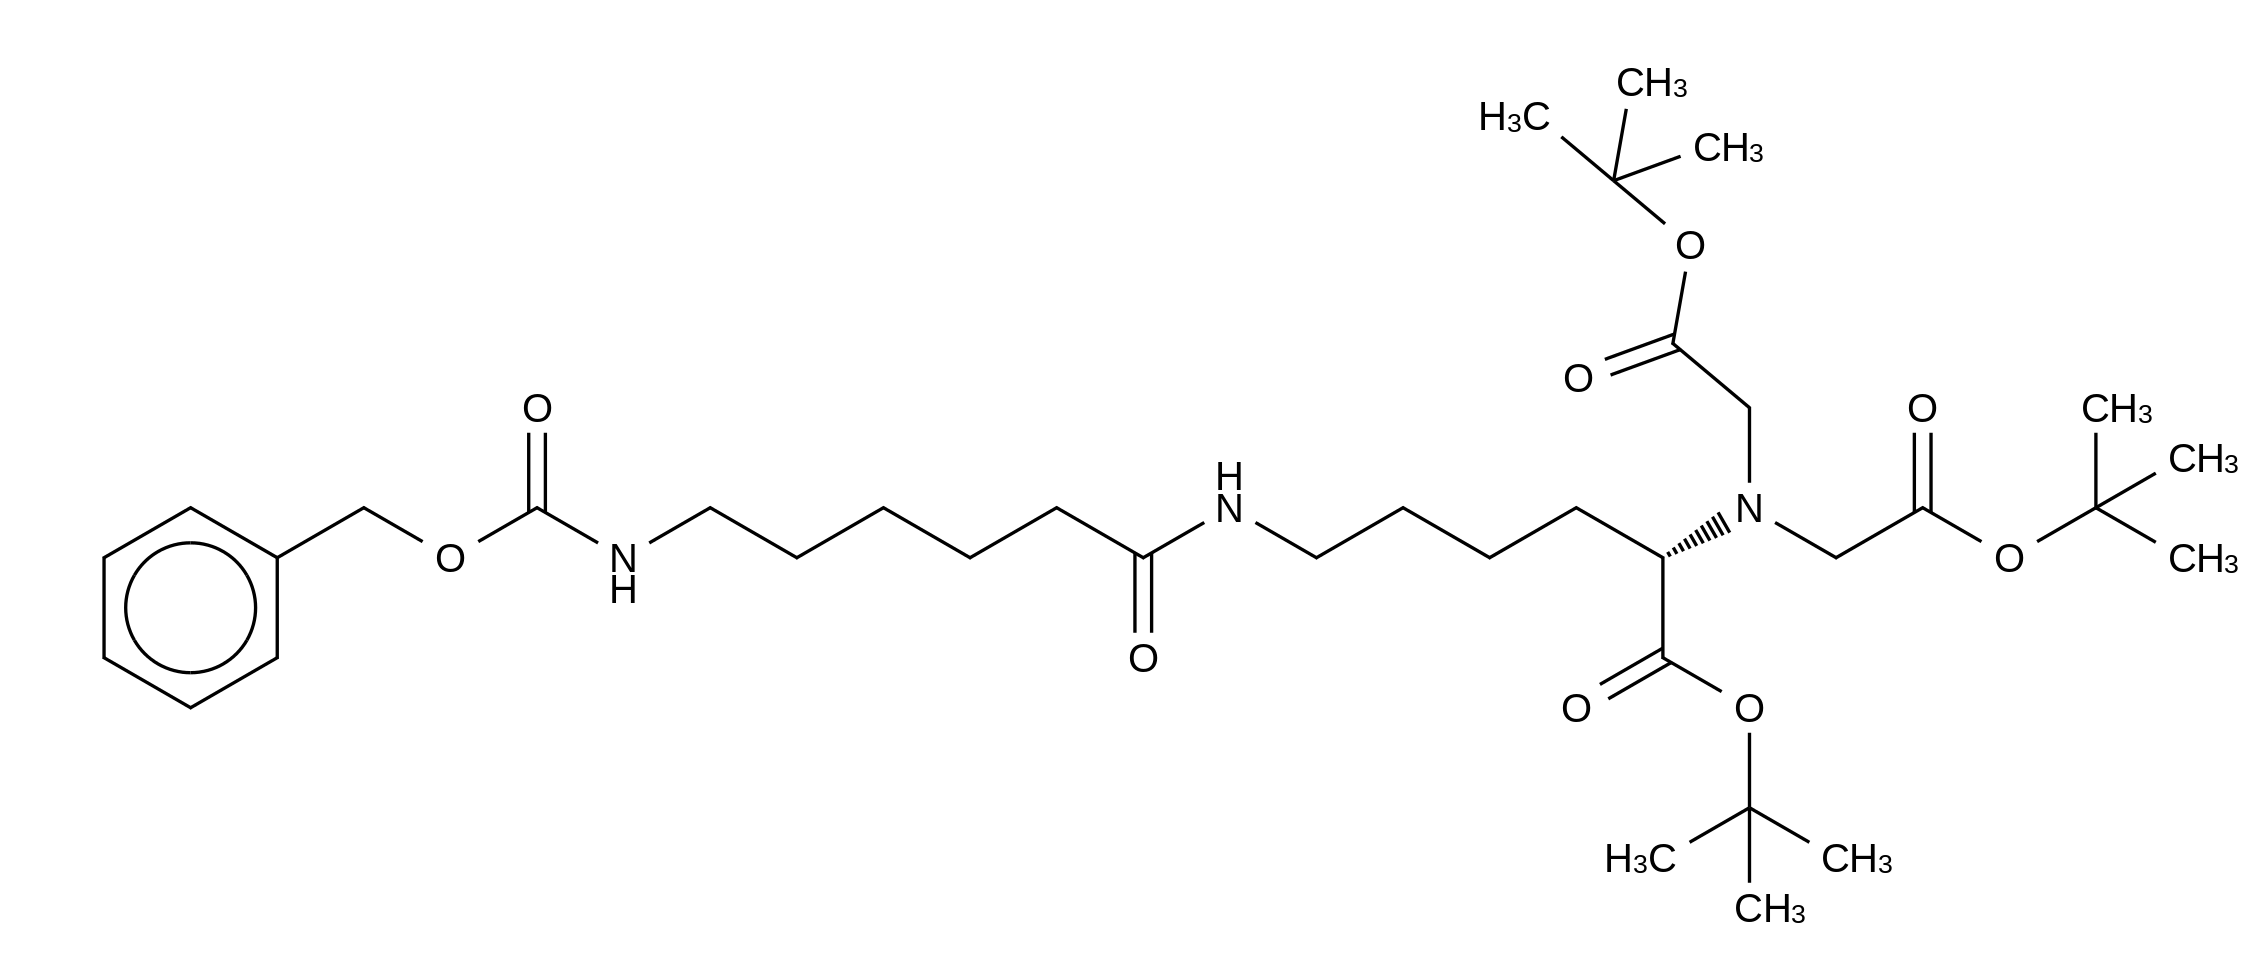 N-Benzyloxycarbonyl Aminocaproic Nitrilotriacetic Acid Tri-tert-butylester